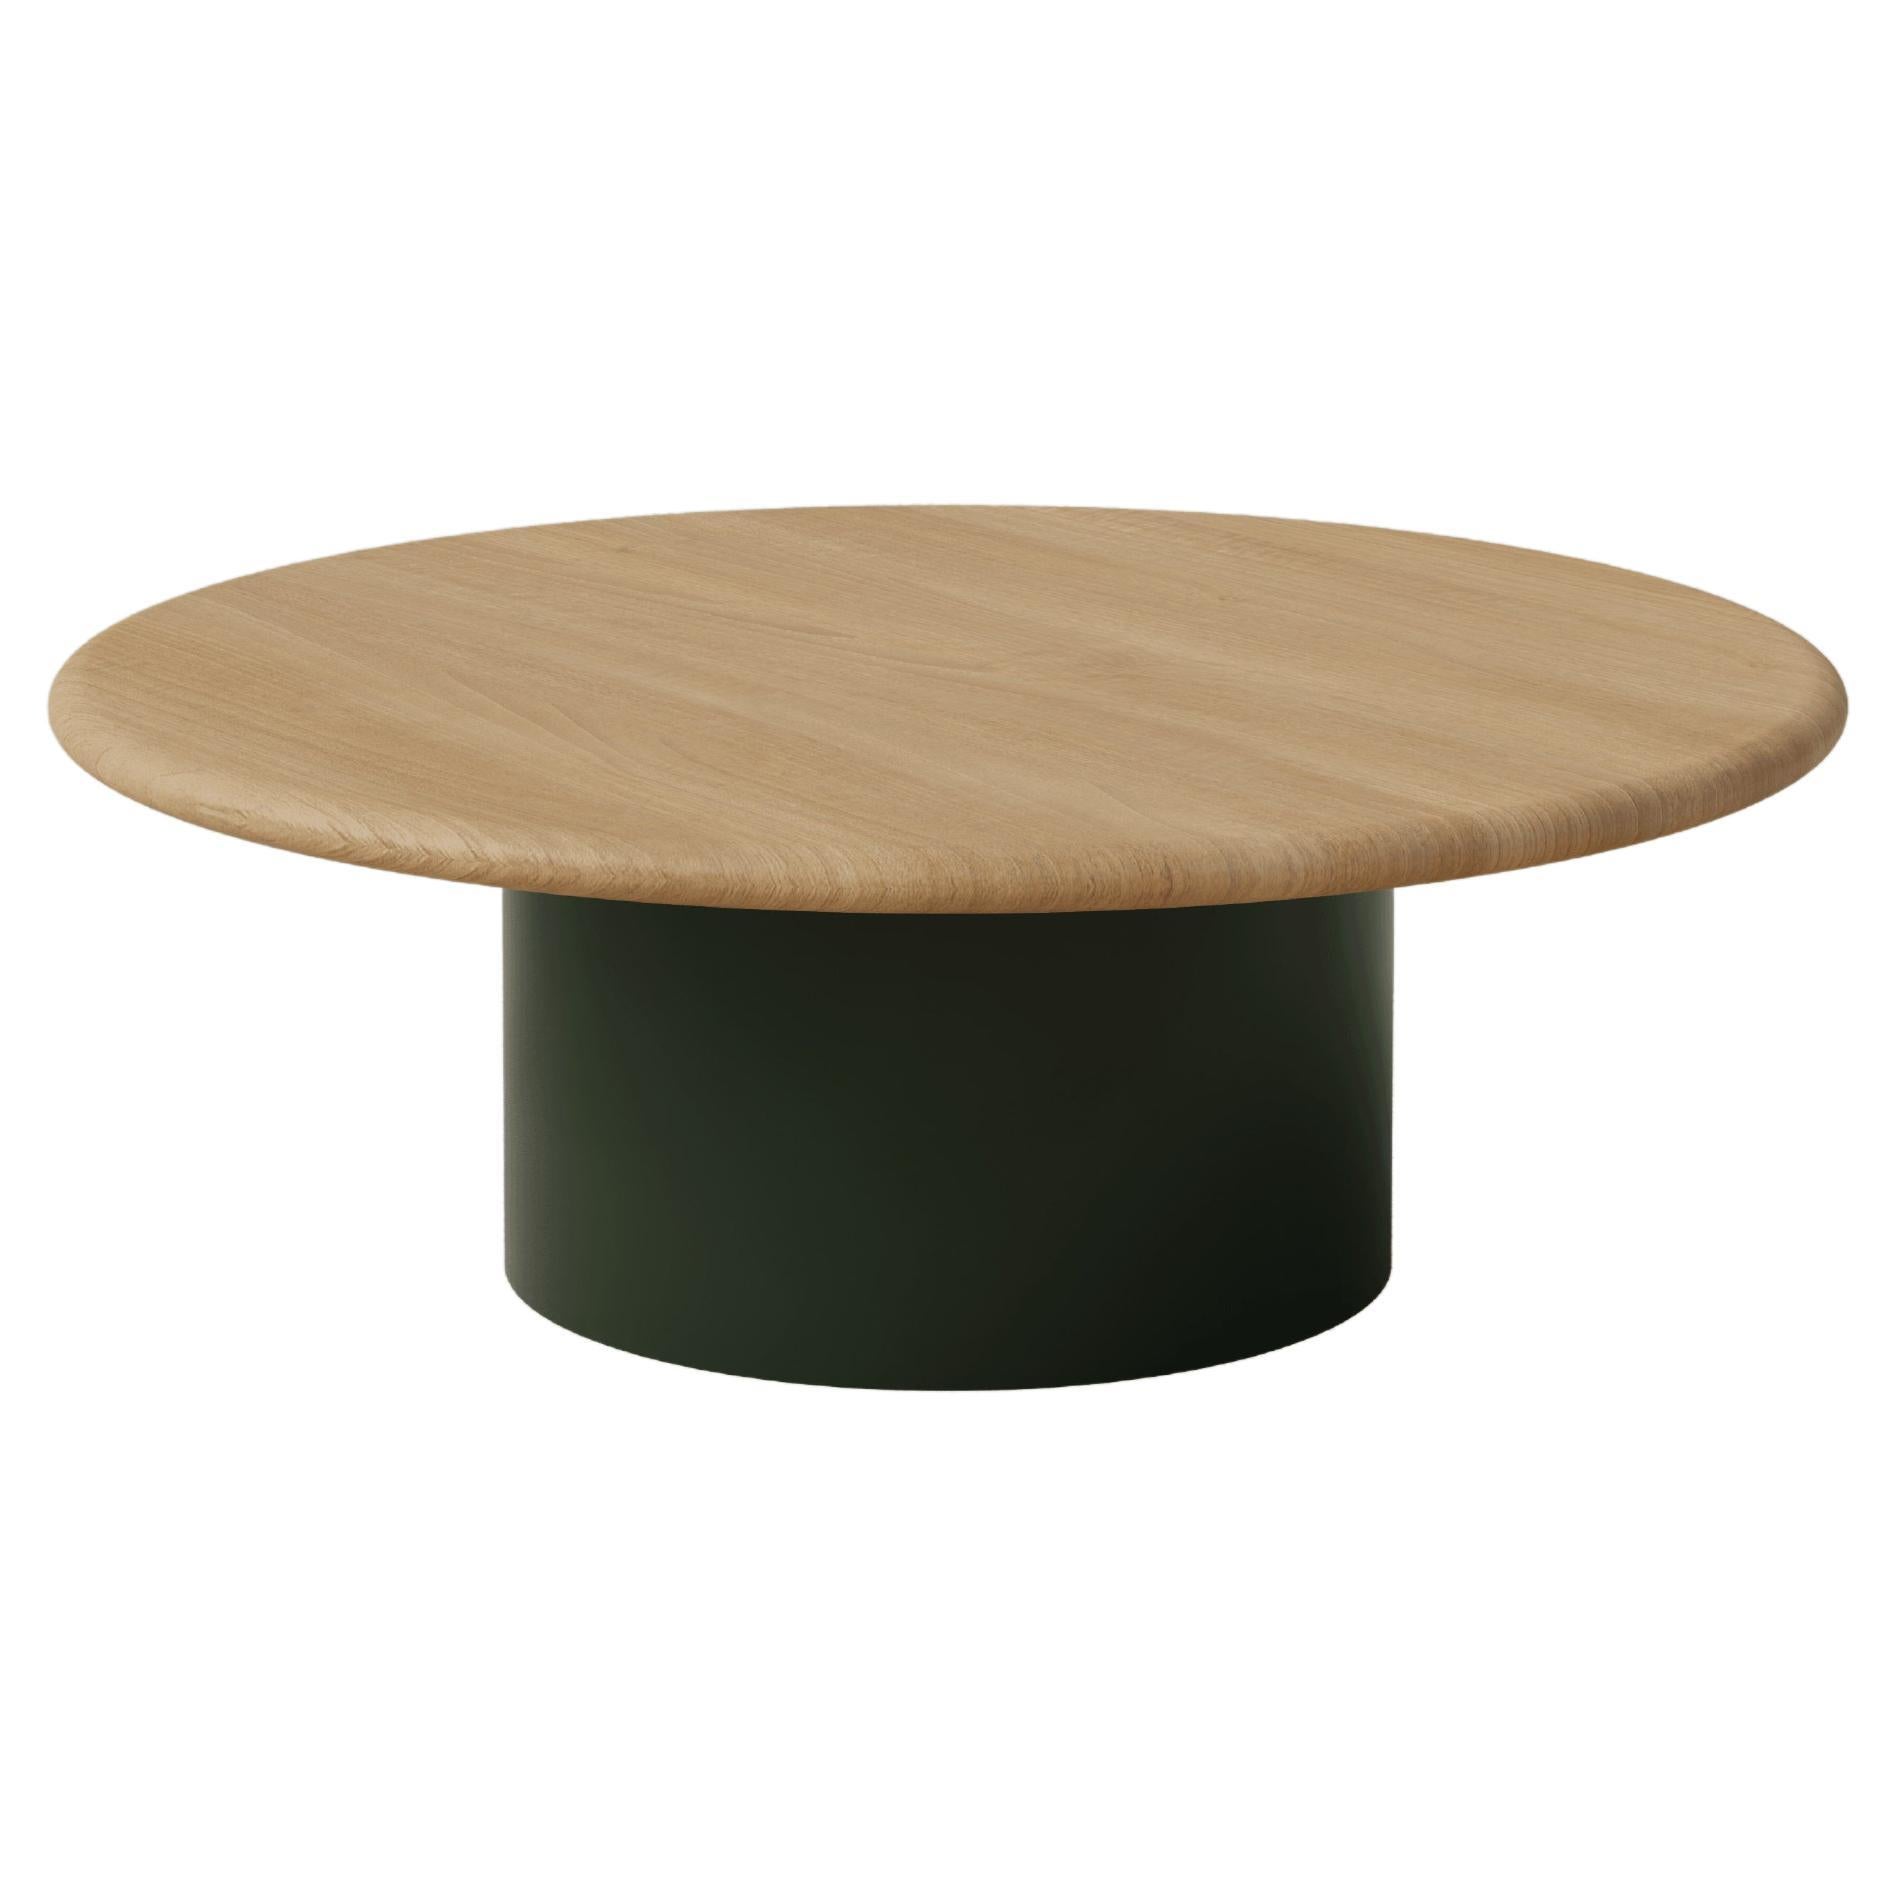 Raindrop Coffee Table, 800, Oak / Moss Green For Sale